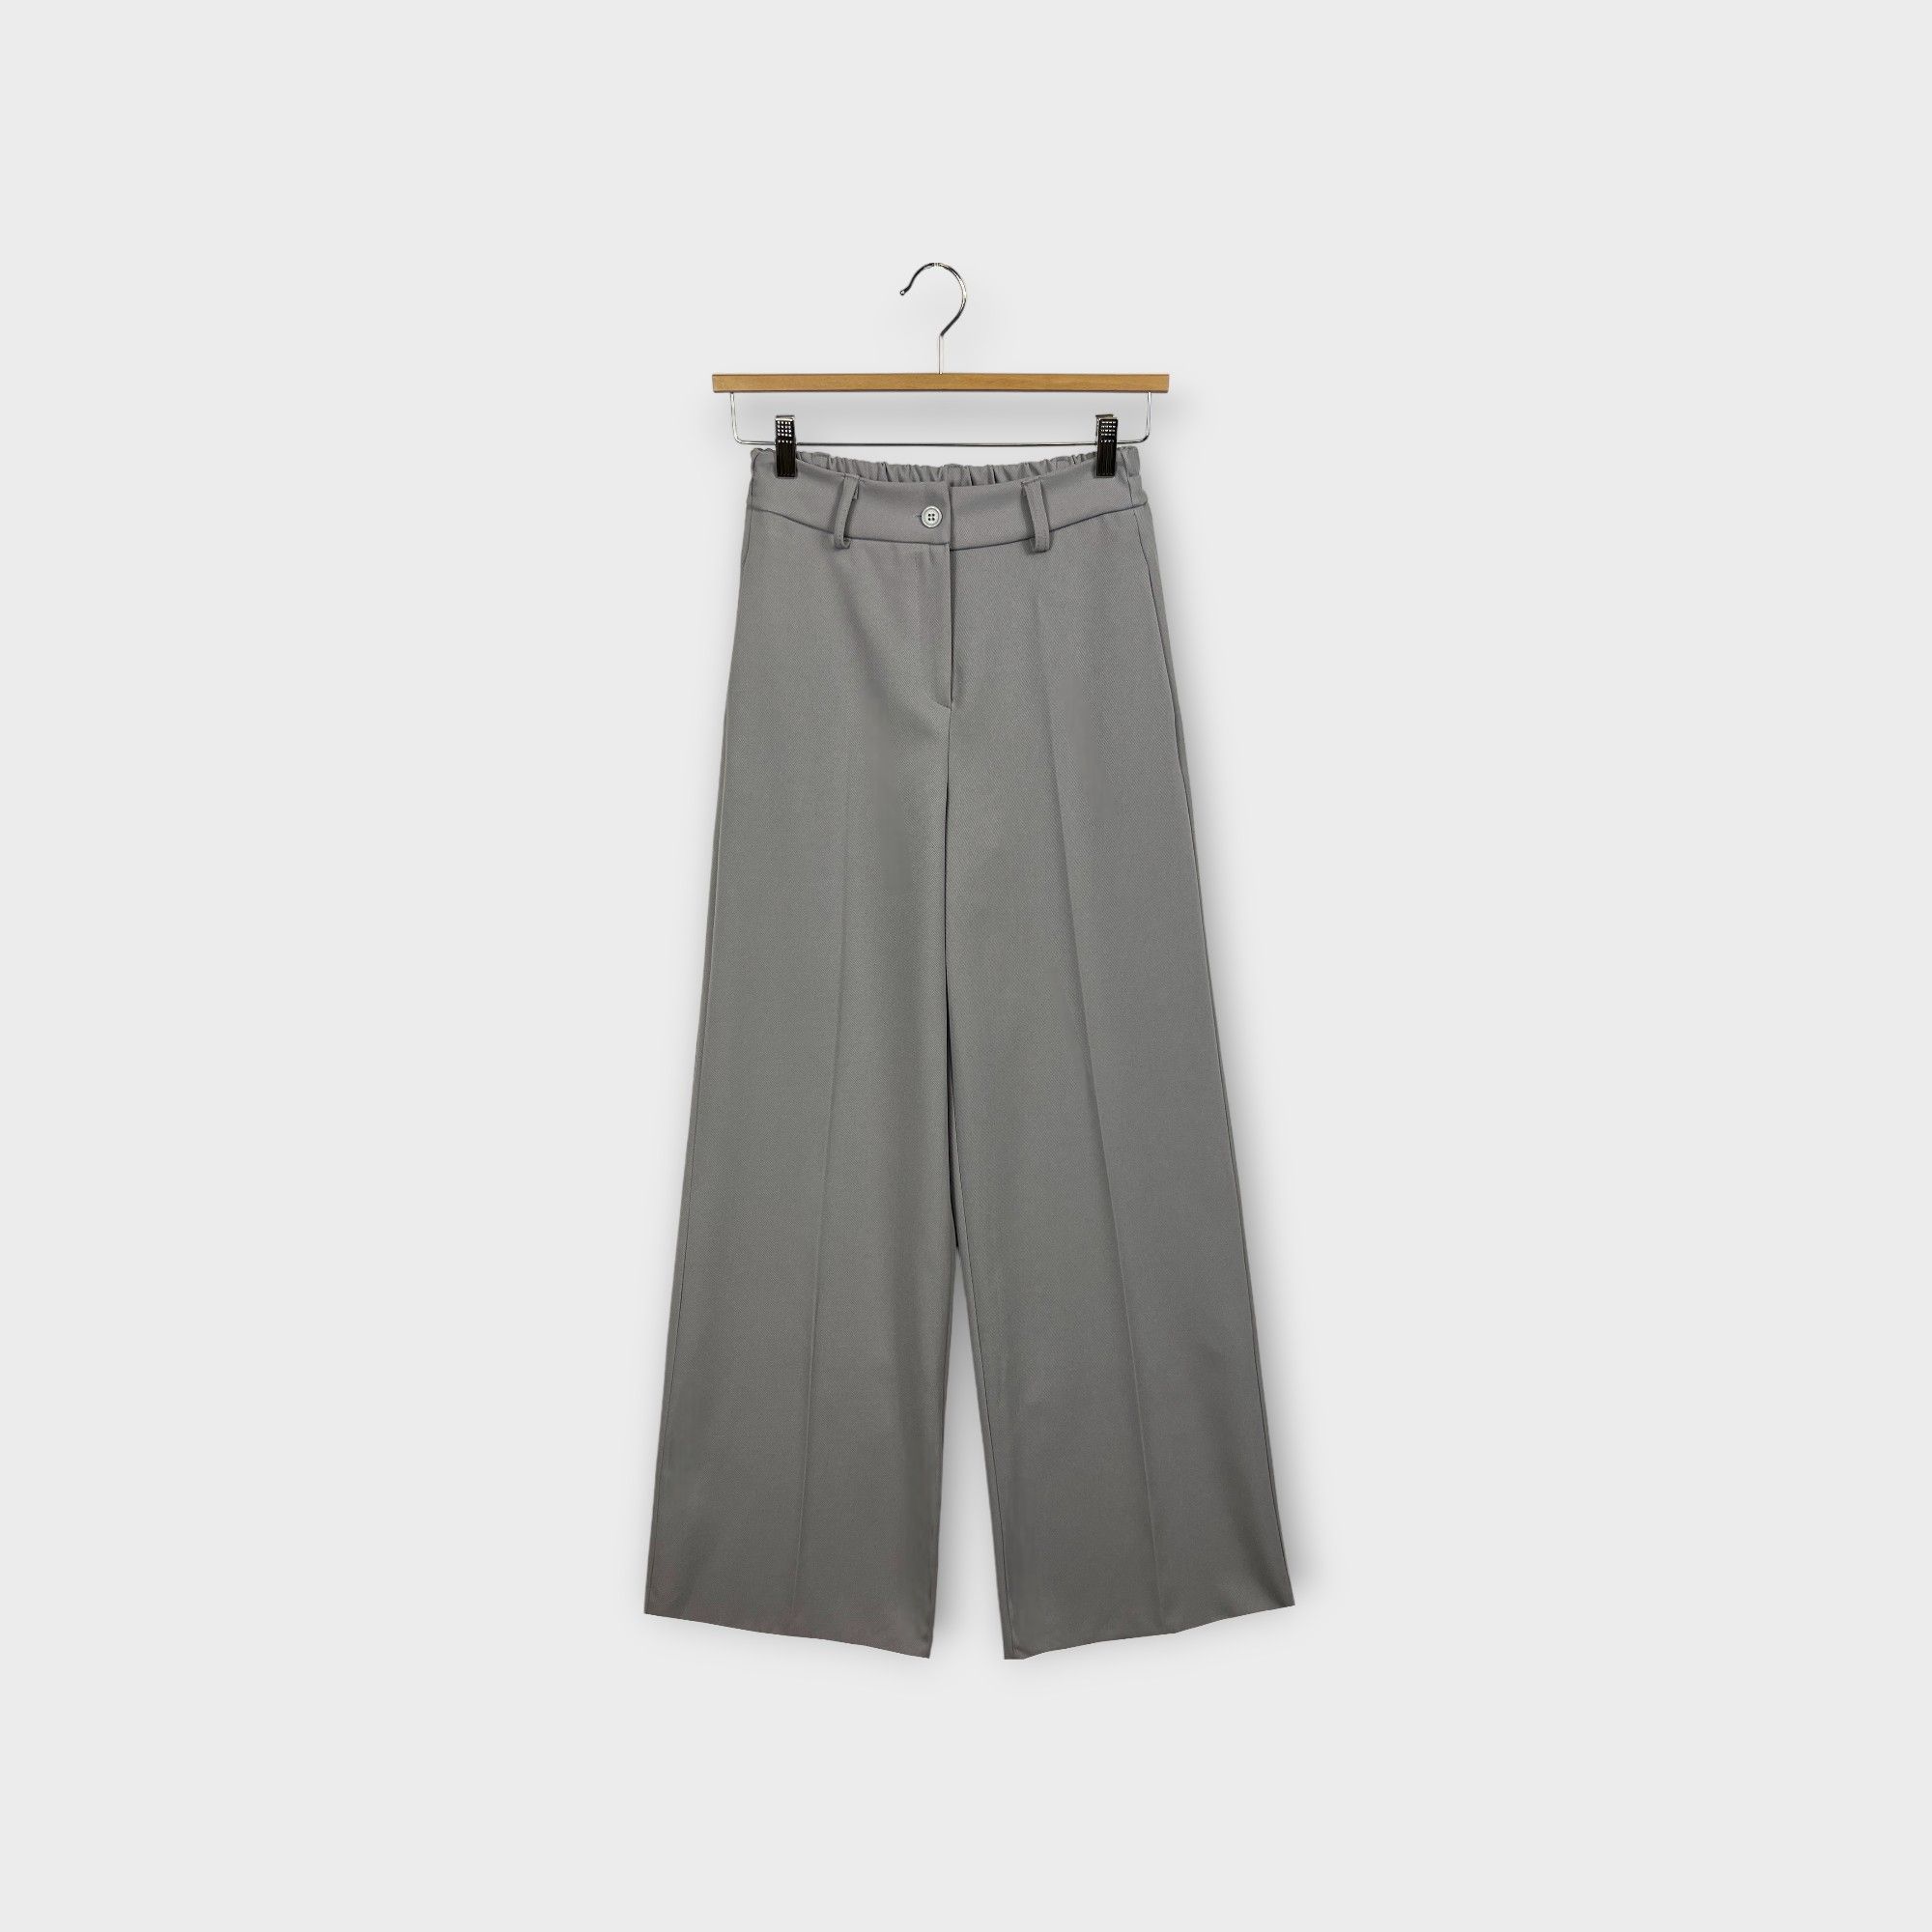 images/virtuemart/product/HELLEH Pantaloni donna modello palazzo in tricotina stretch colore grigio 1.jpg